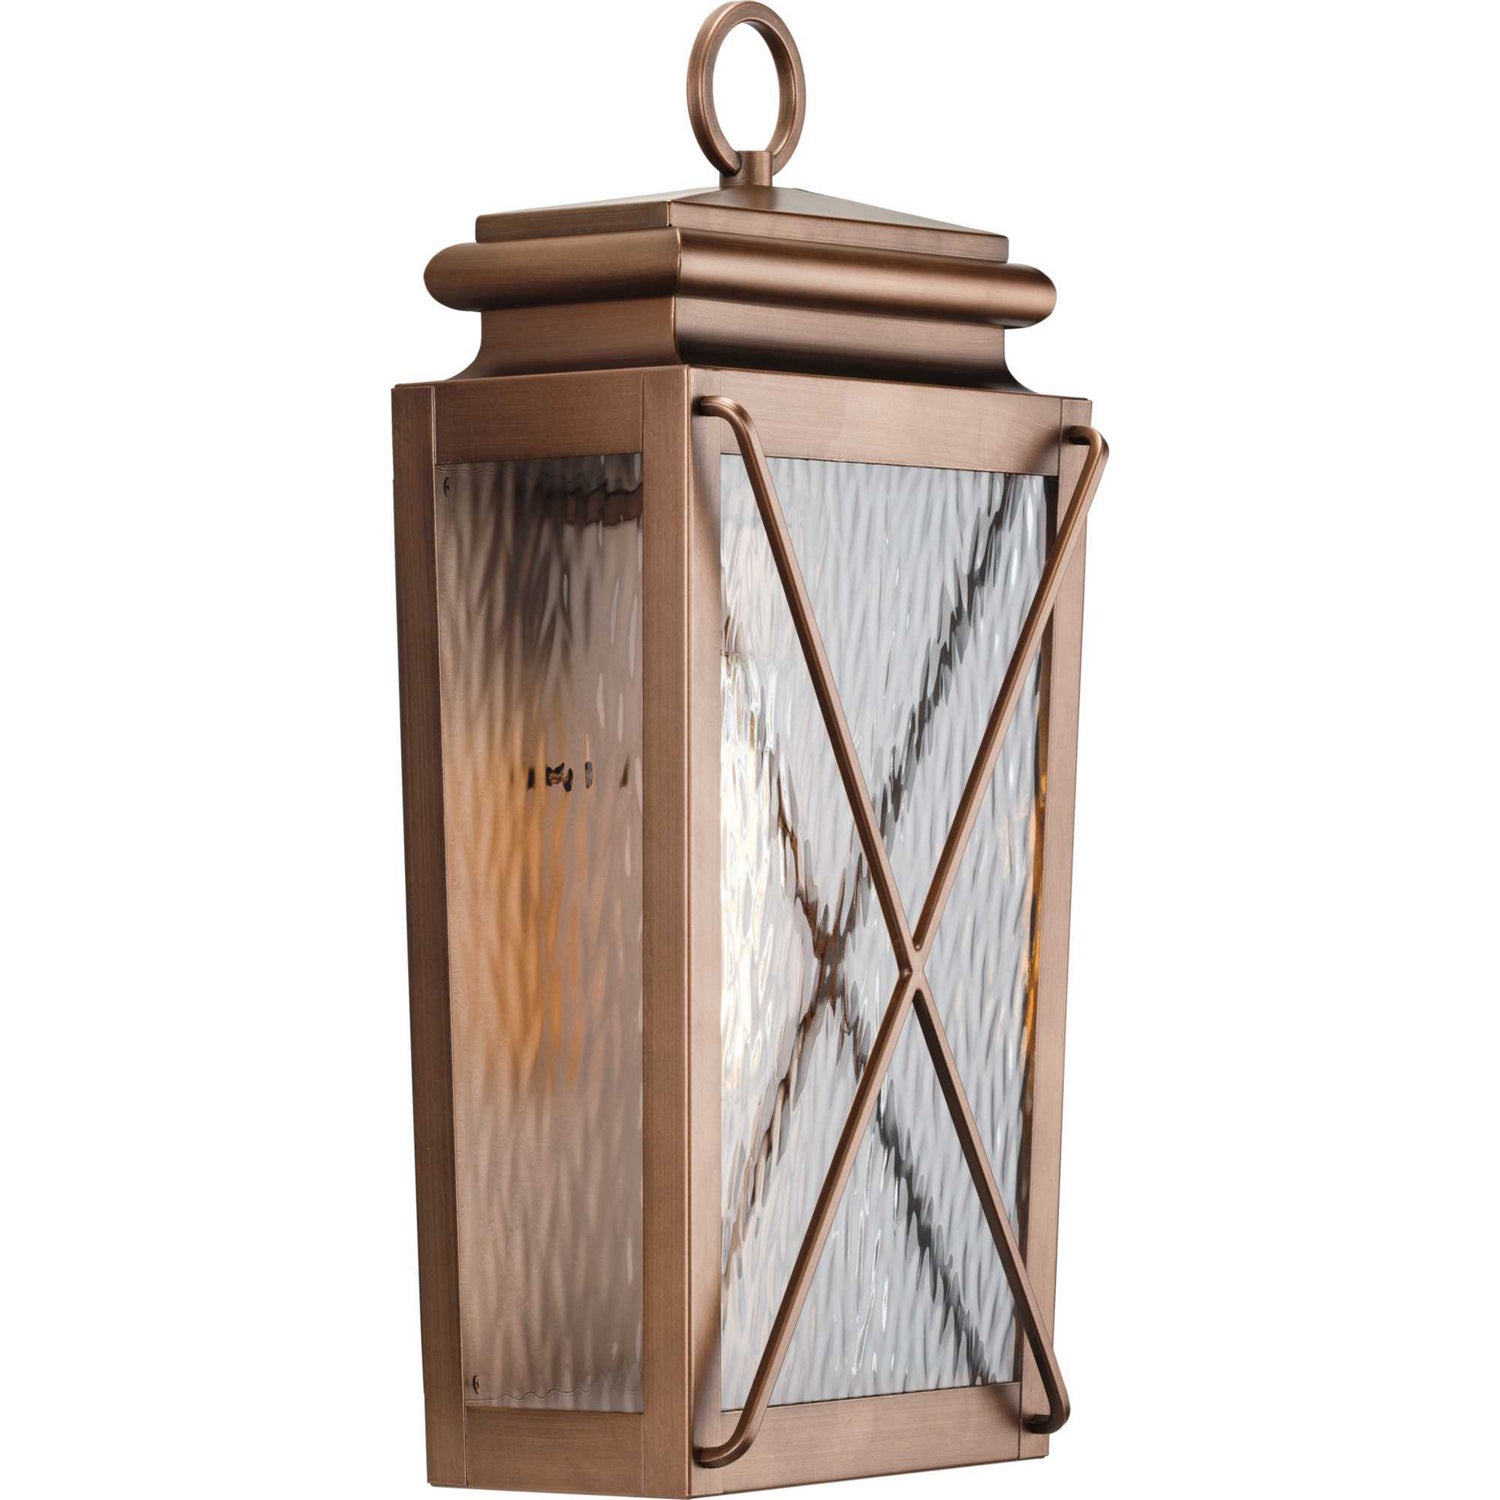 Progress Canada - One Light Wall Lantern - Wakeford - Antique Copper (Painted)- Union Lighting Luminaires Decor